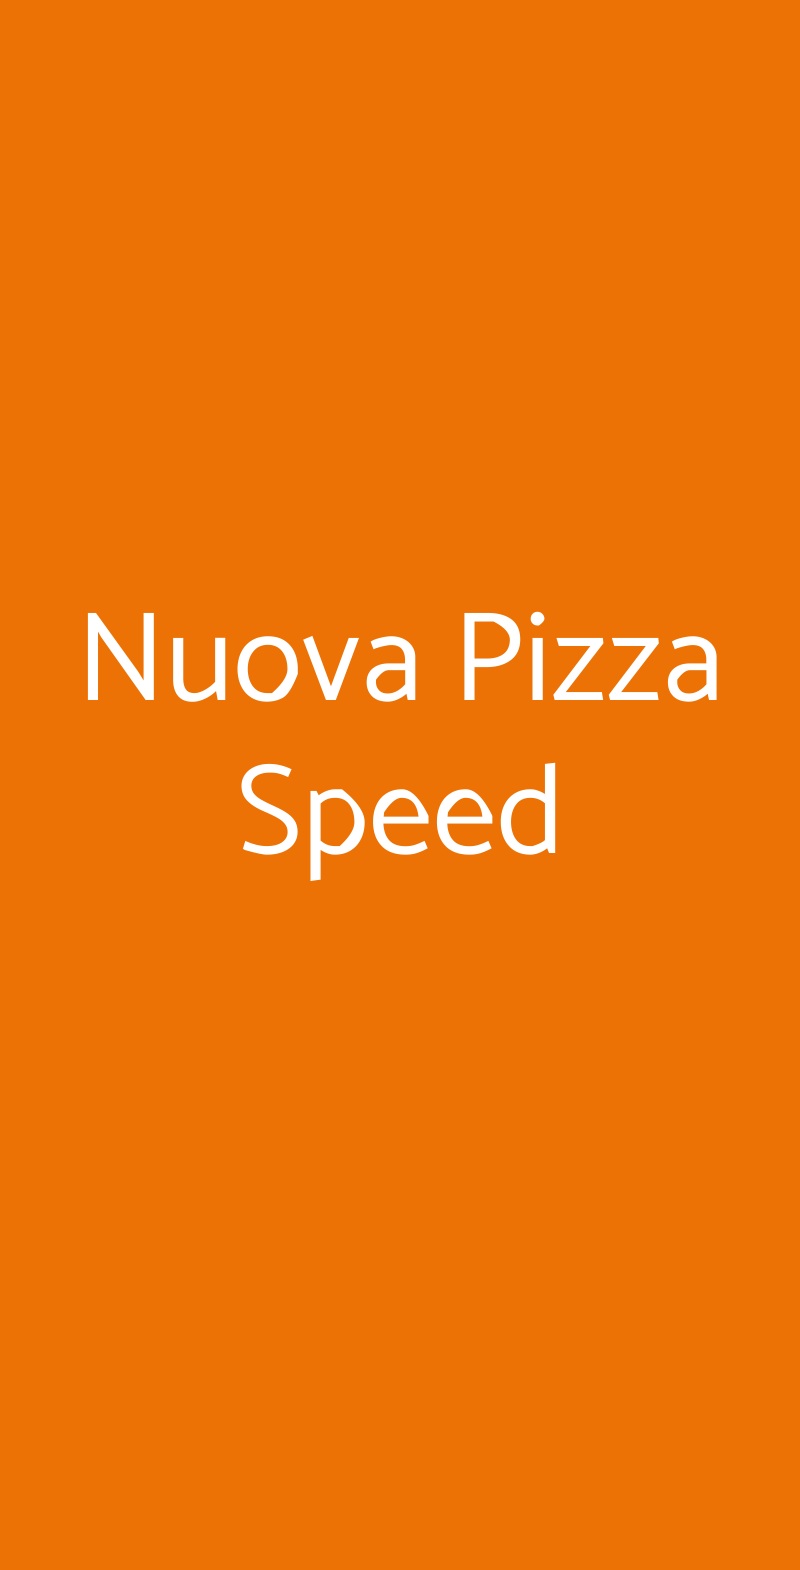 Nuova Pizza Speed San Martino Buon Albergo menù 1 pagina